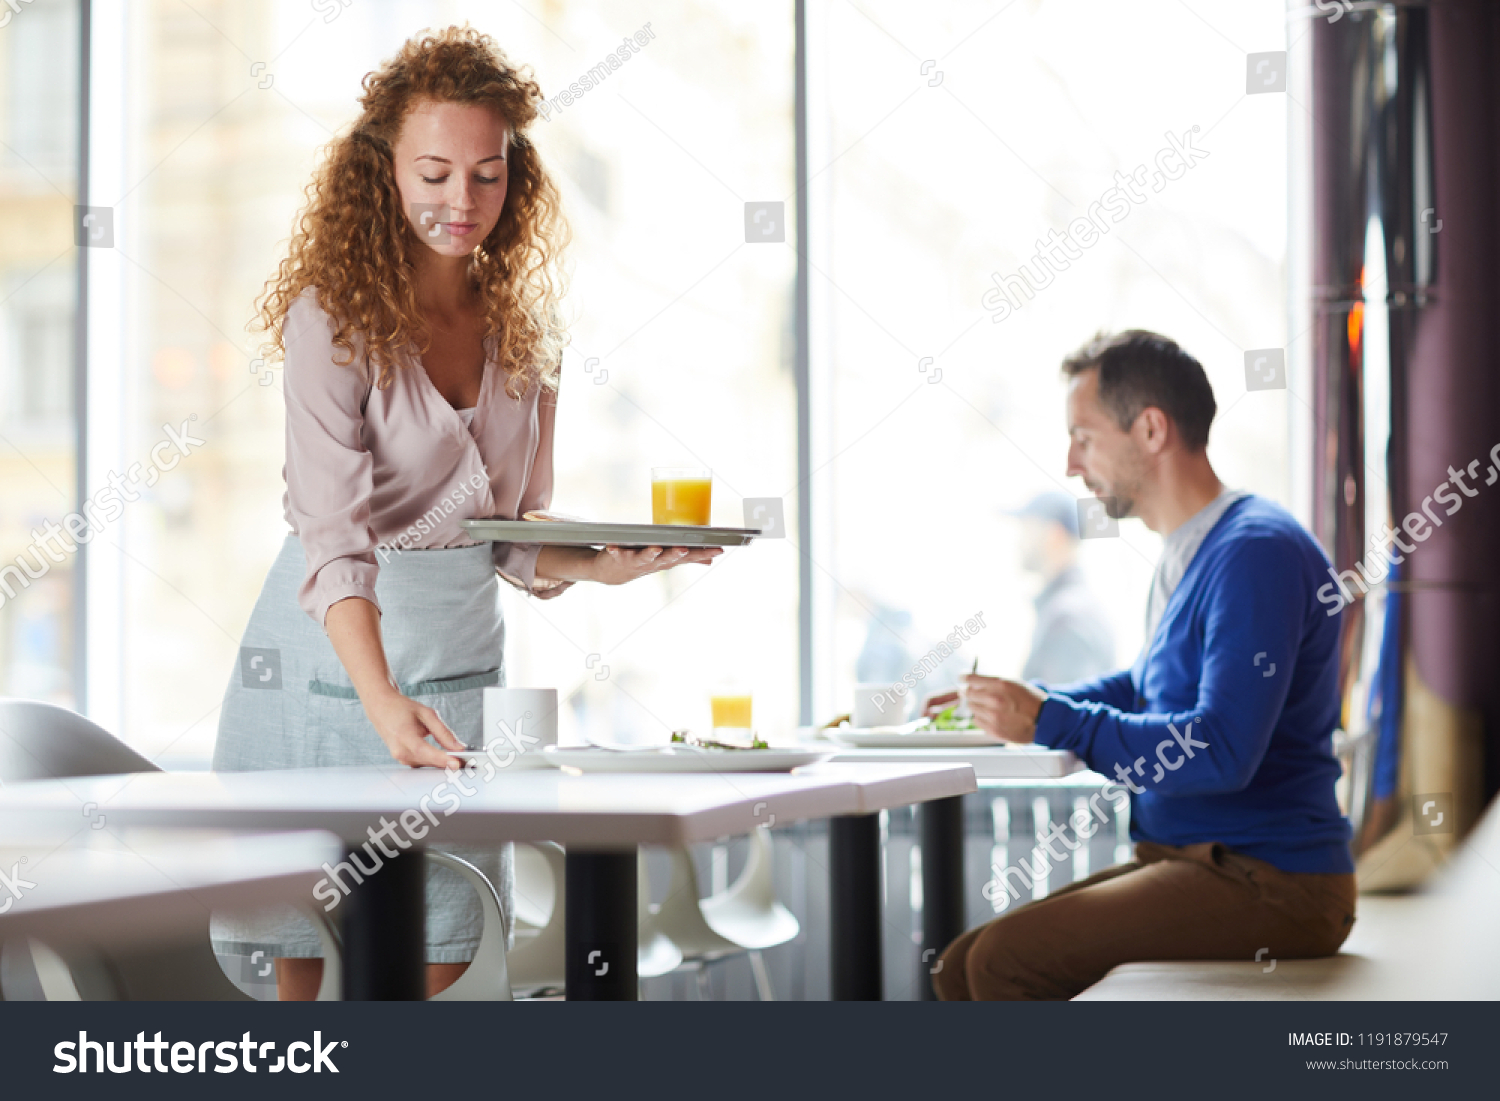 Доверчивый растущий вытрите стол. Девушка берет со стола. Официант убирает со стола. Девочка унесла посуду со столов. Кладет тарелку на стол официантка.